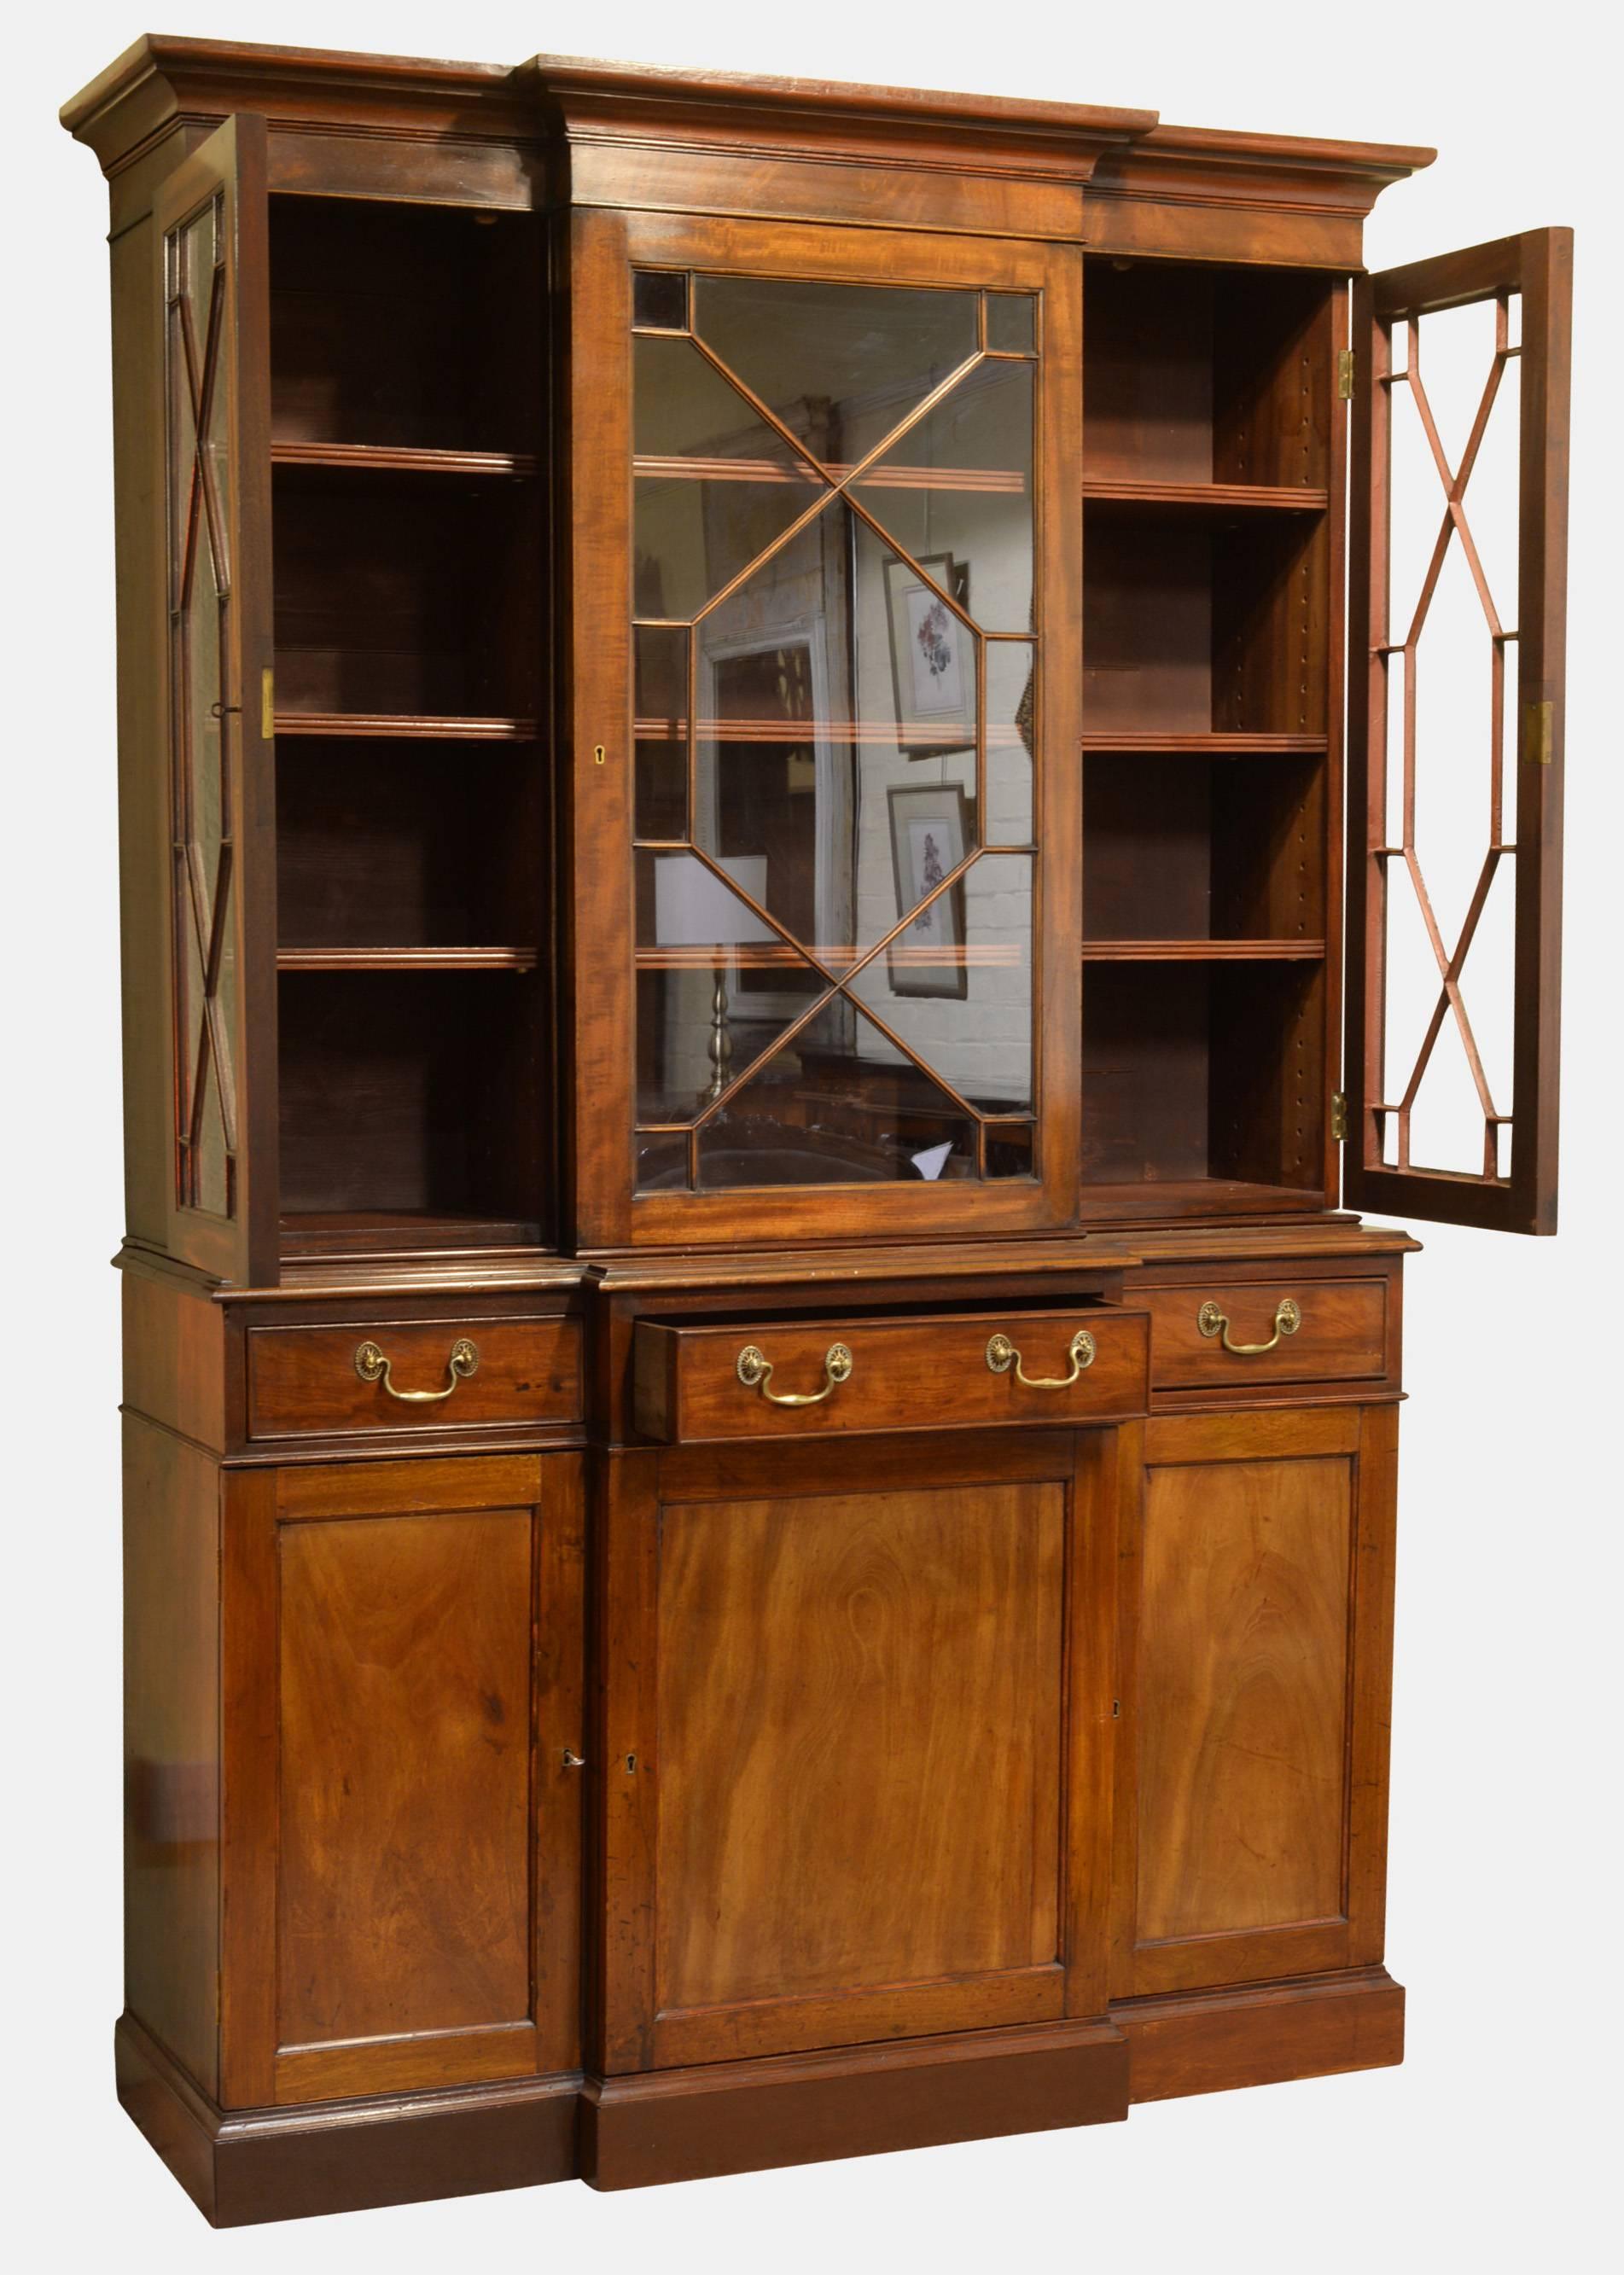 A George III style mahogany small breakfront bookcase,

circa 1960.